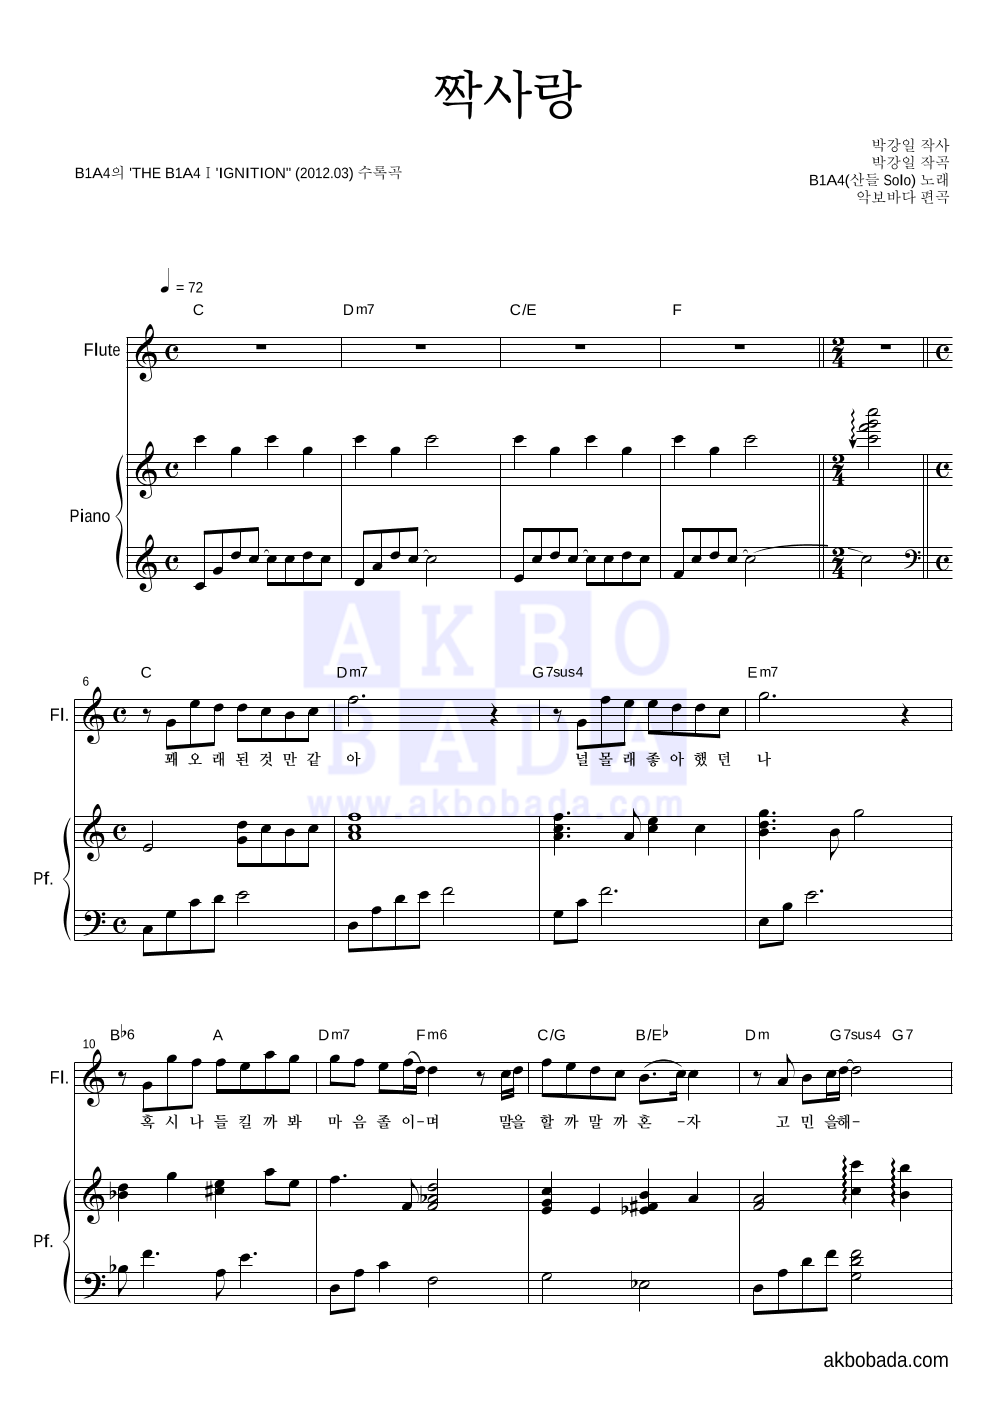 B1A4 - 짝사랑 (산들 Solo) 플룻&피아노 악보 